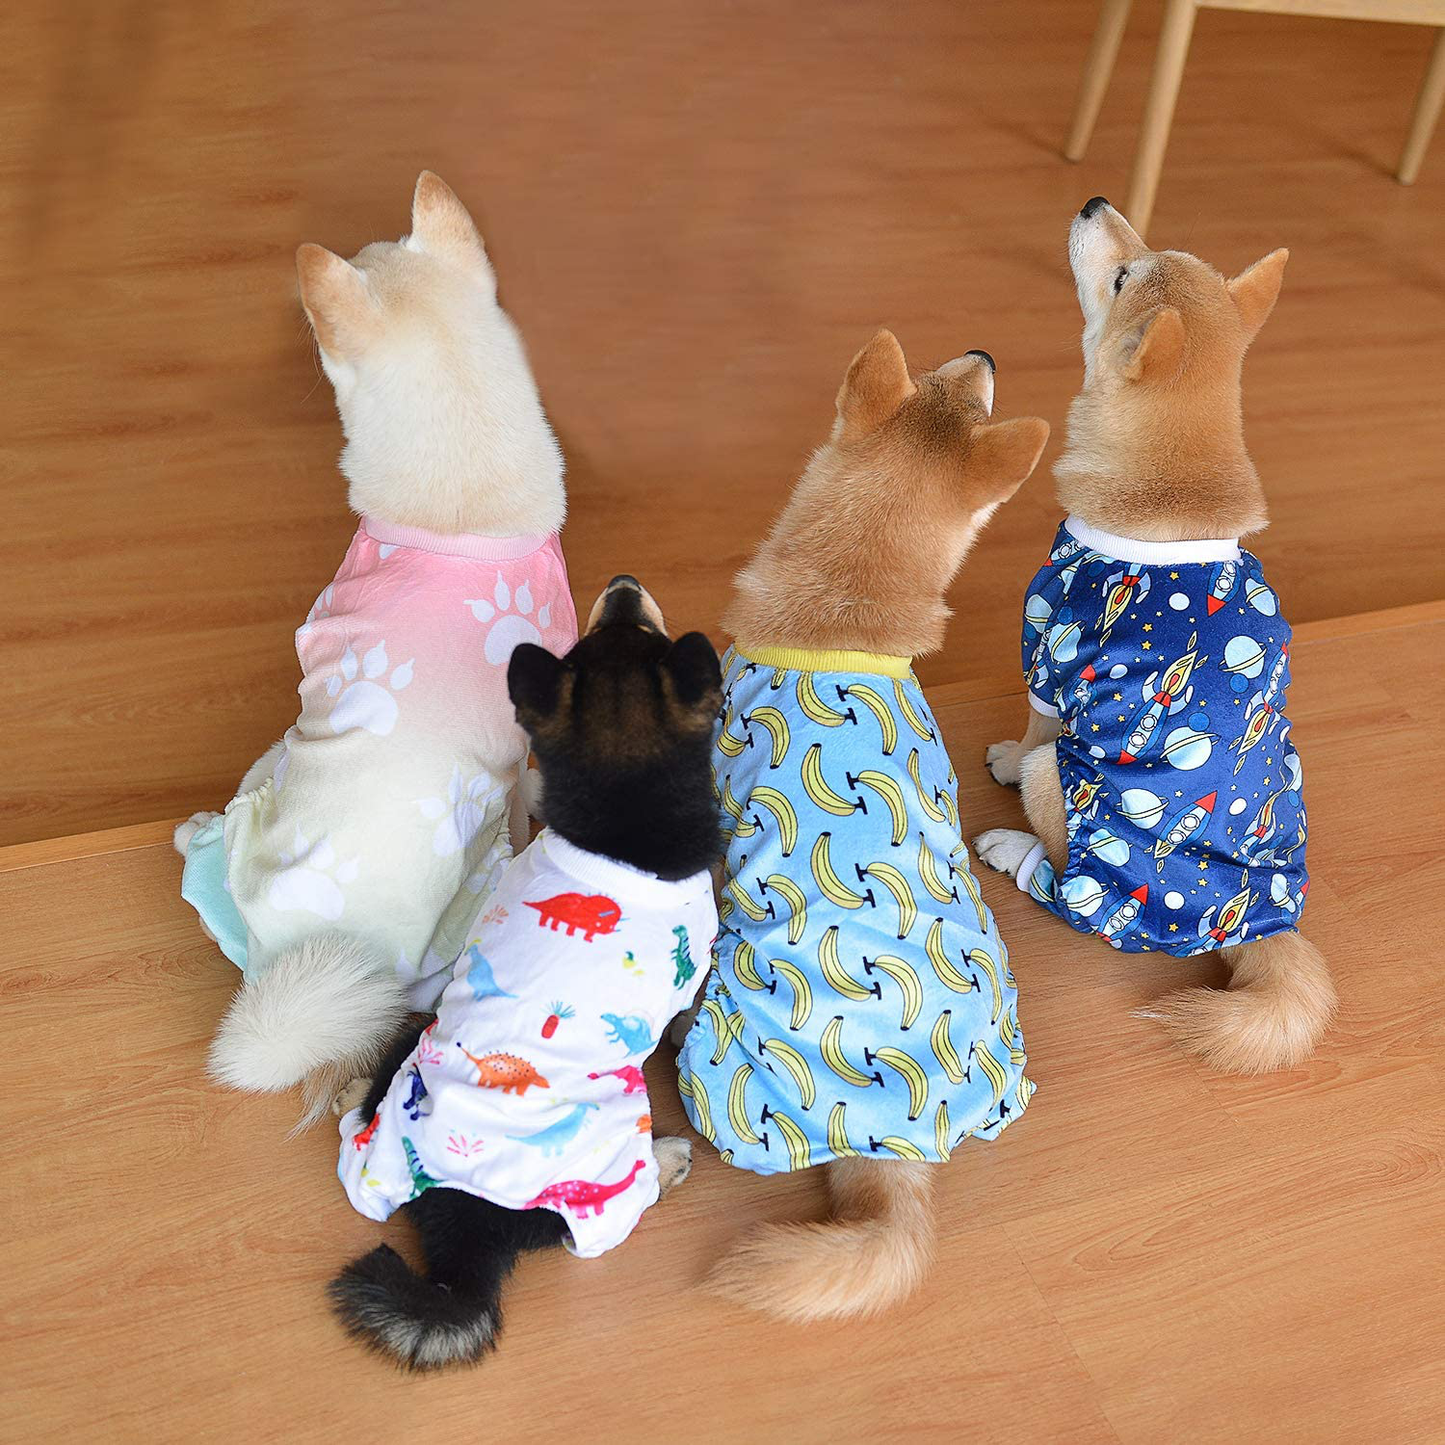 Cutebone Dog Pajamas Soft Cat Clothes Cute Puppy Apparel Doggie Outfit Pet Pjs Onesie Animals & Pet Supplies > Pet Supplies > Dog Supplies > Dog Apparel CuteBone   